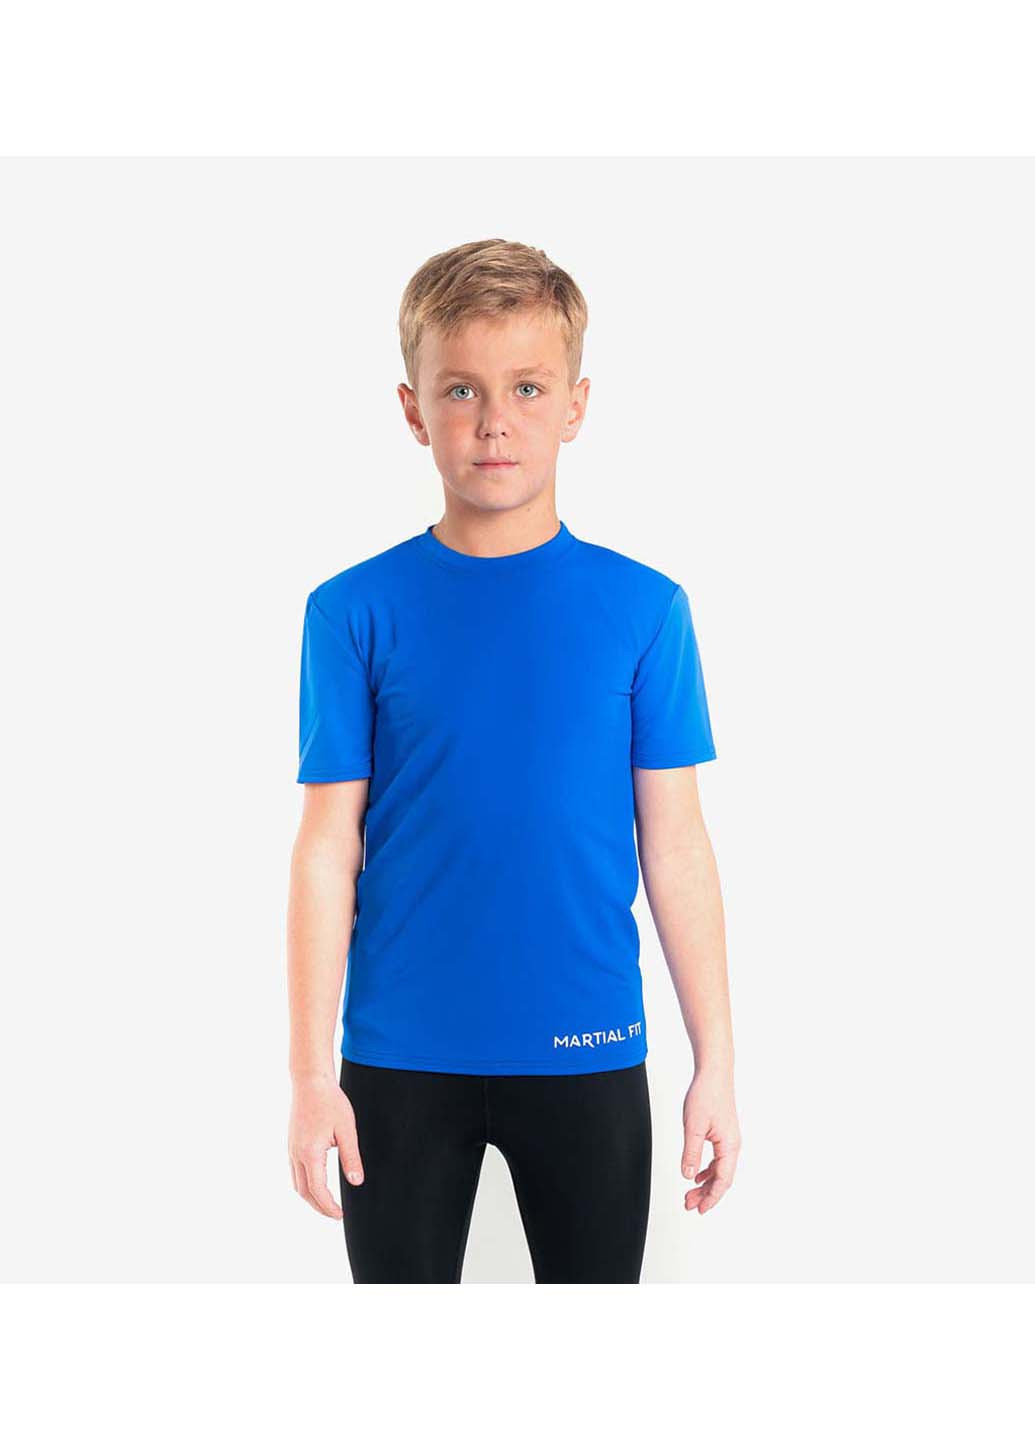 Синяя демисезонная футболка Berserk Sport